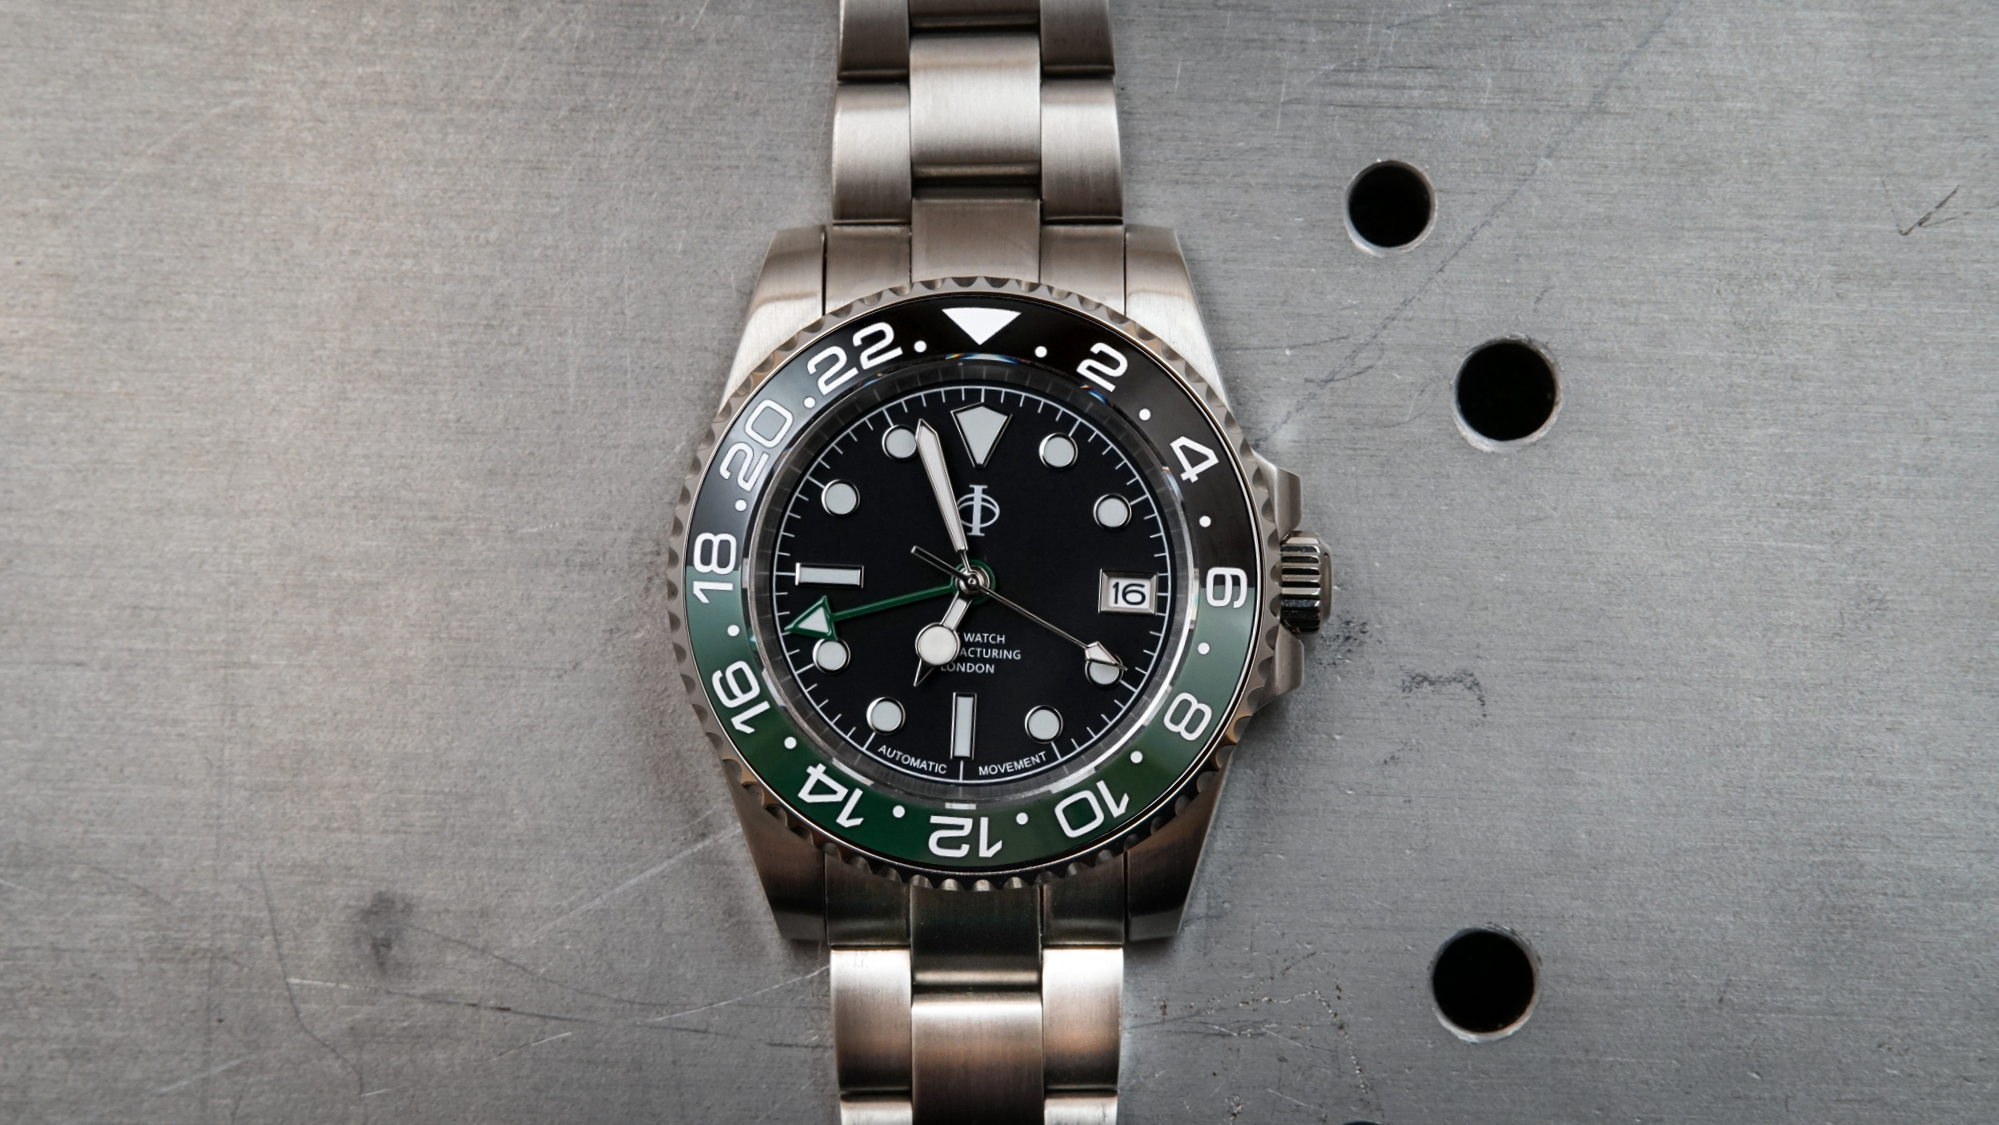 Watchmaking kit - Diver One GMT - Bi-colour bezel - Ref. 23118